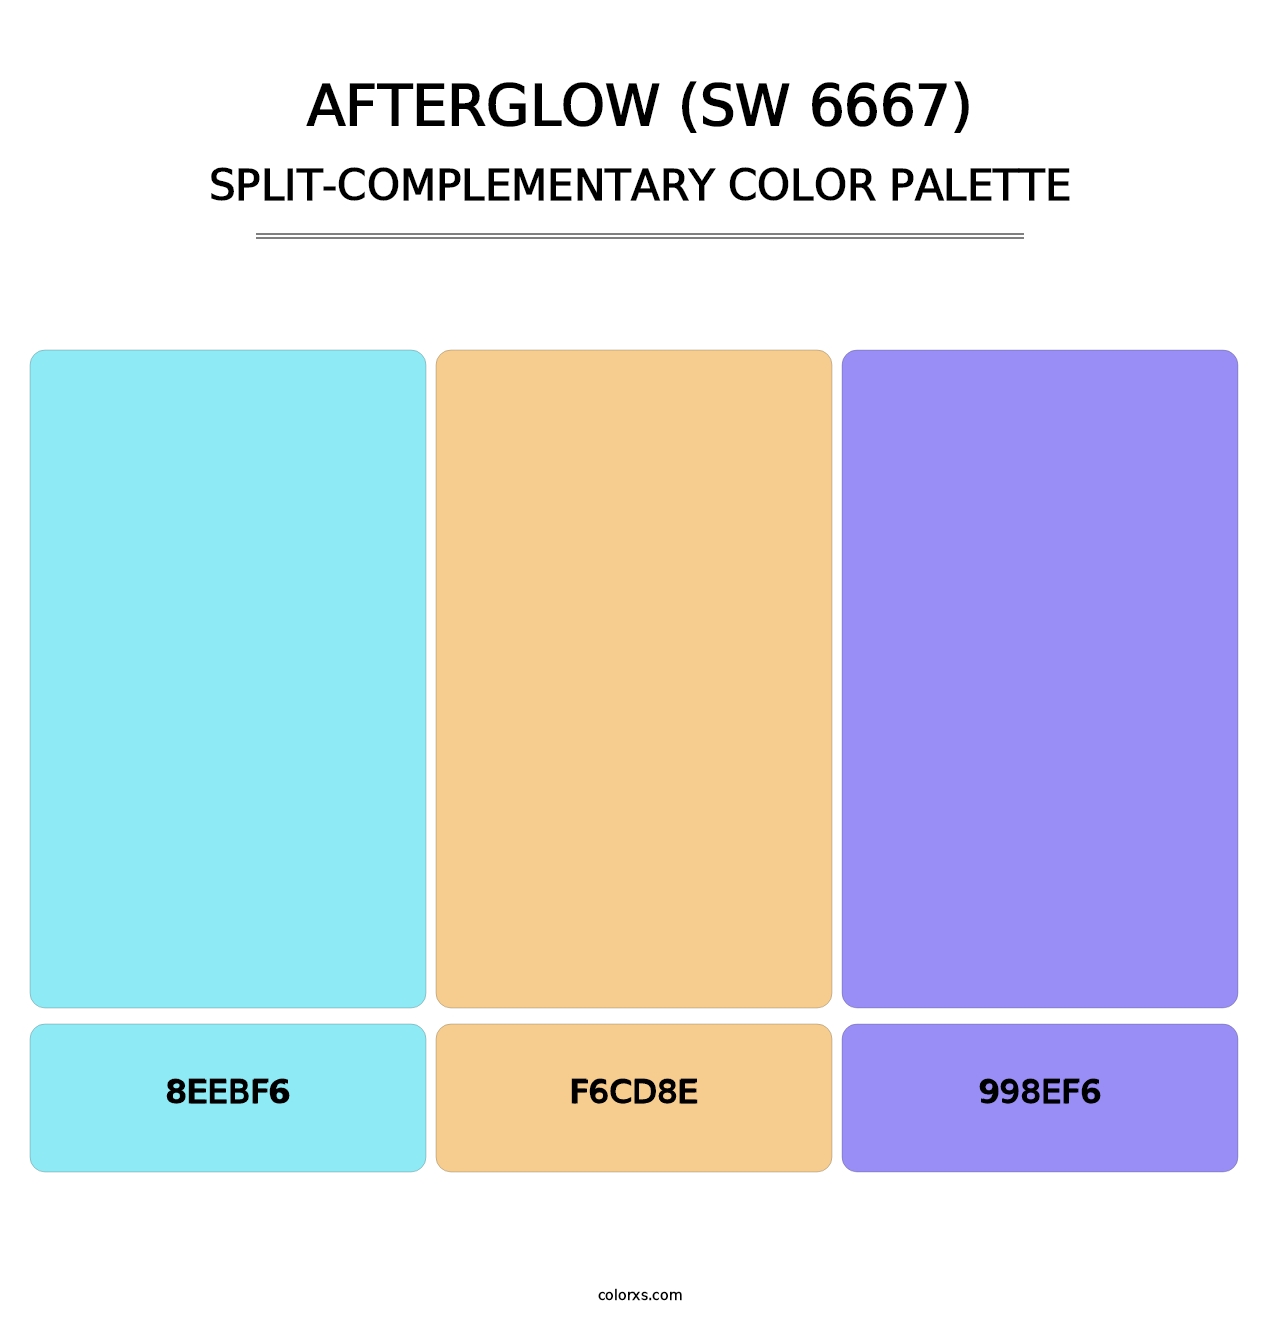 Afterglow (SW 6667) - Split-Complementary Color Palette